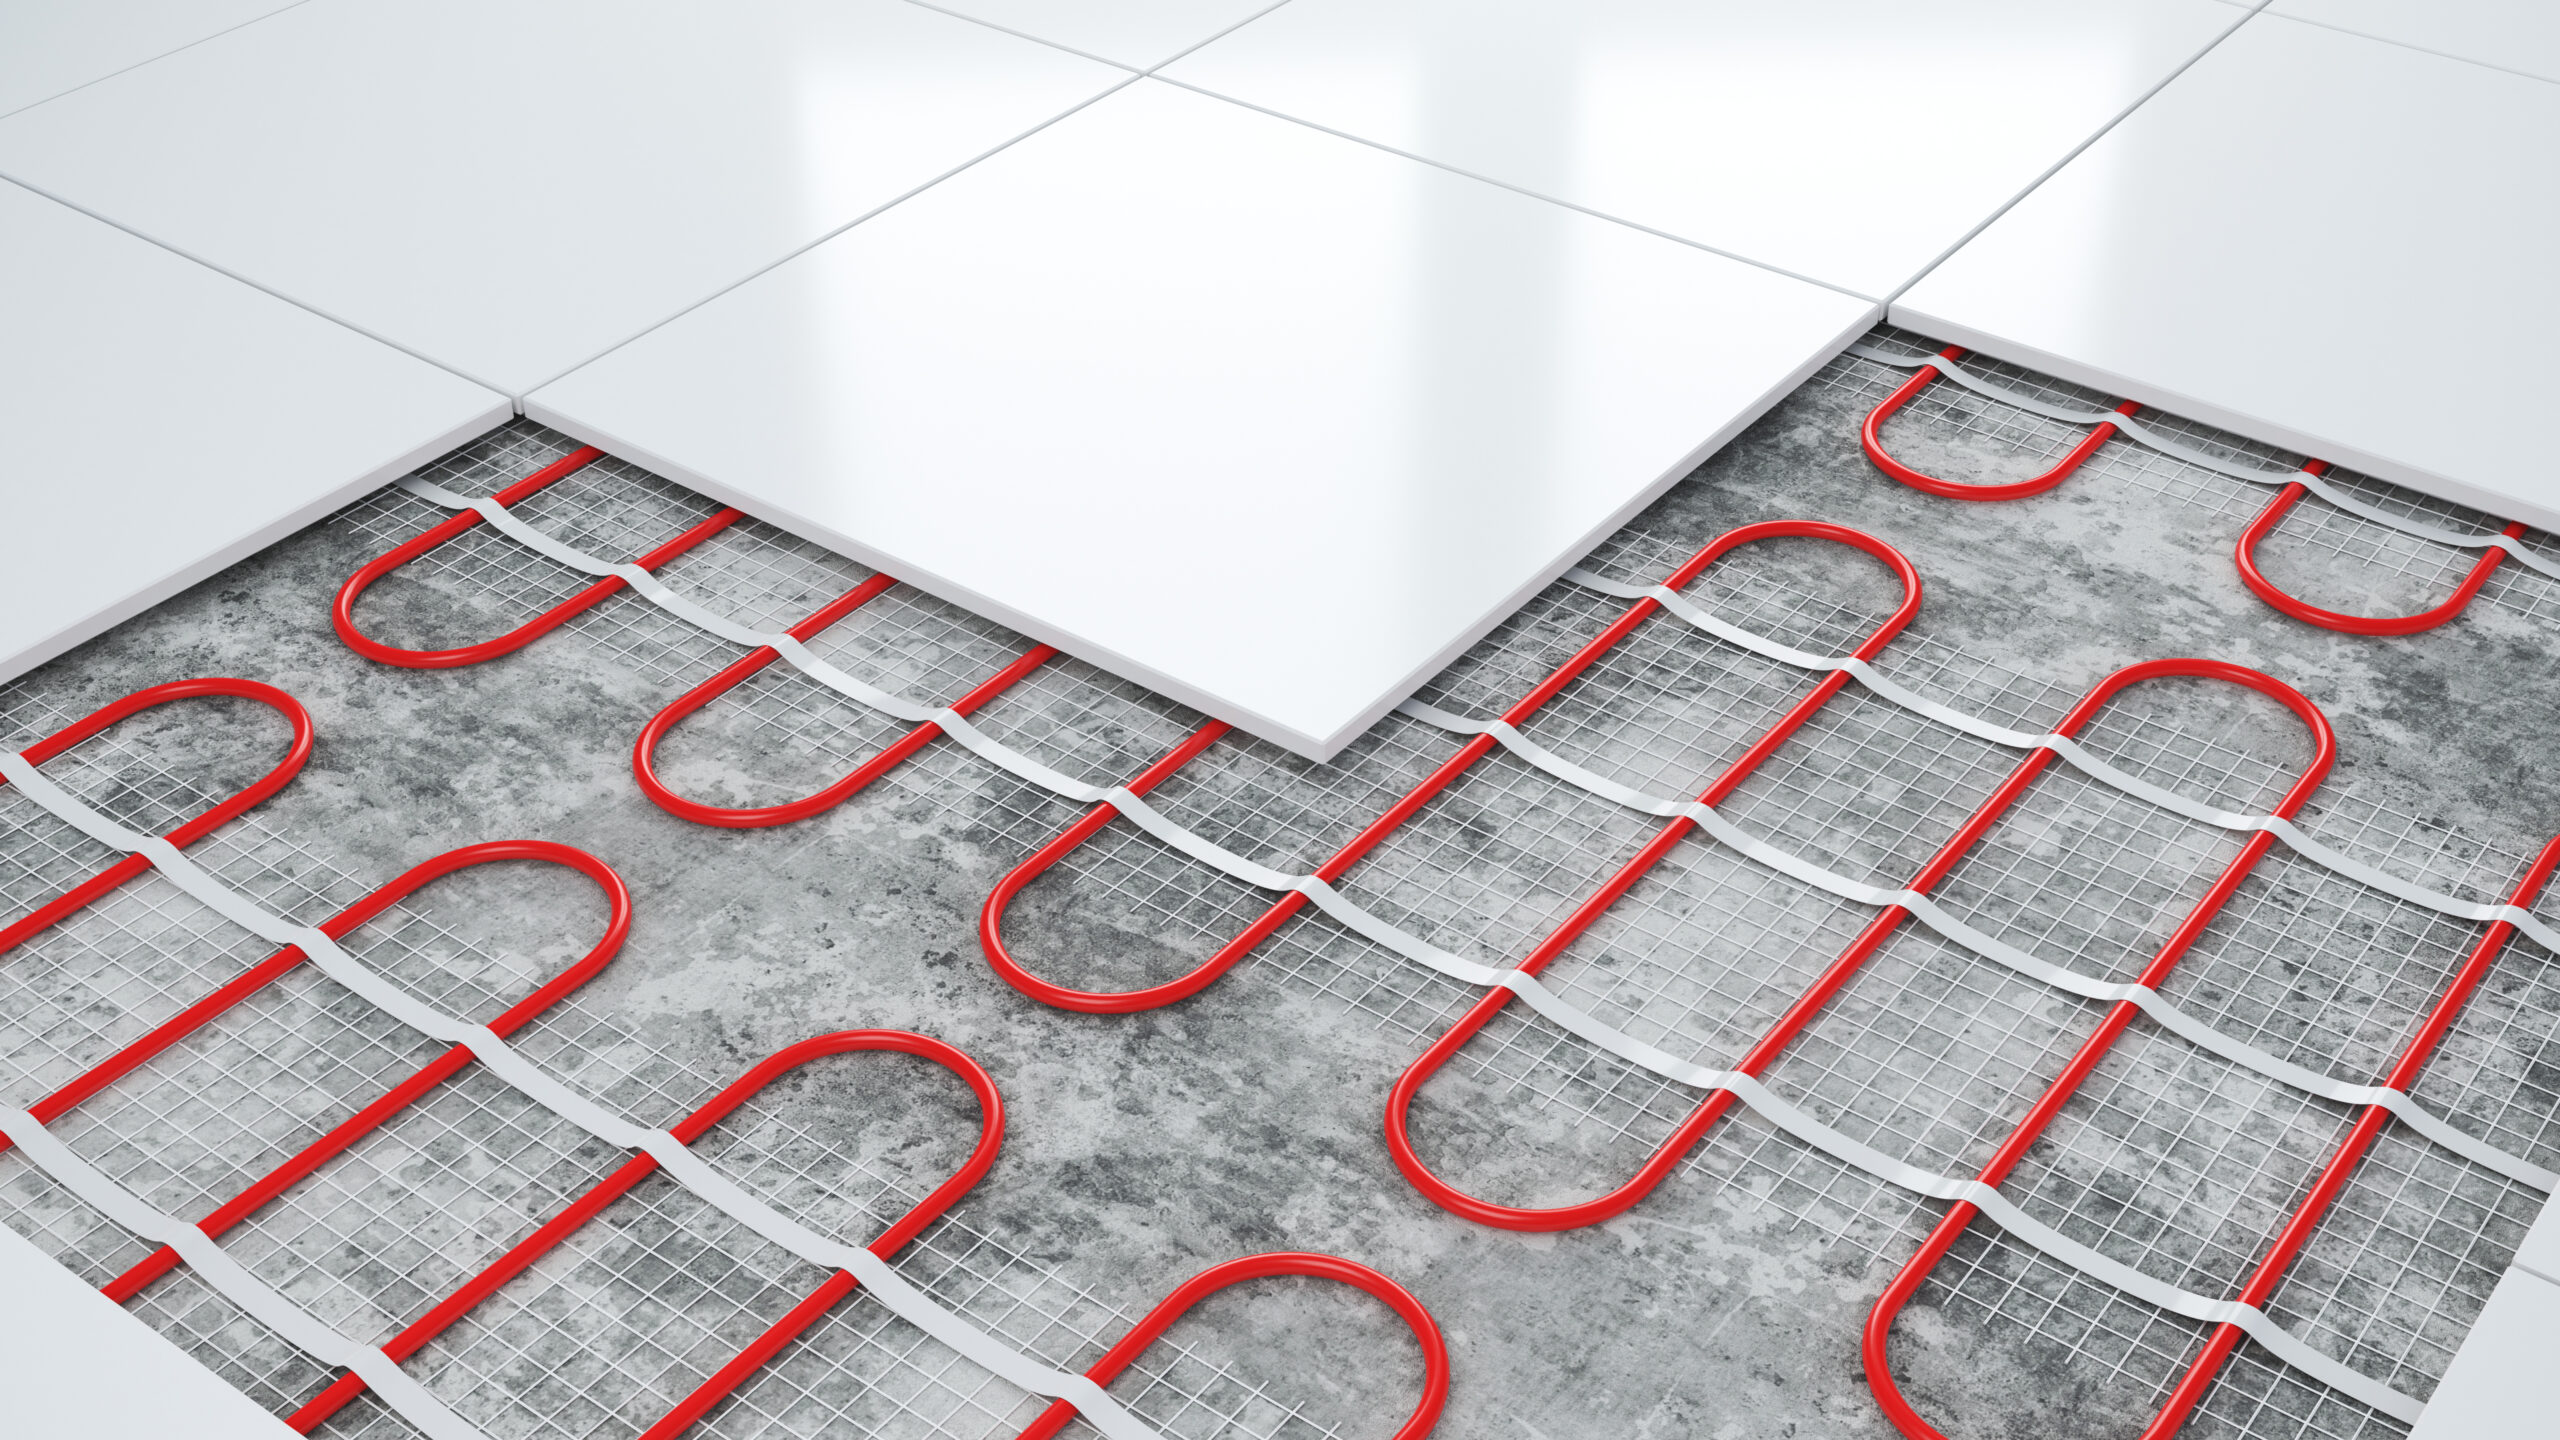 Underfloor heating under a tiled floor.